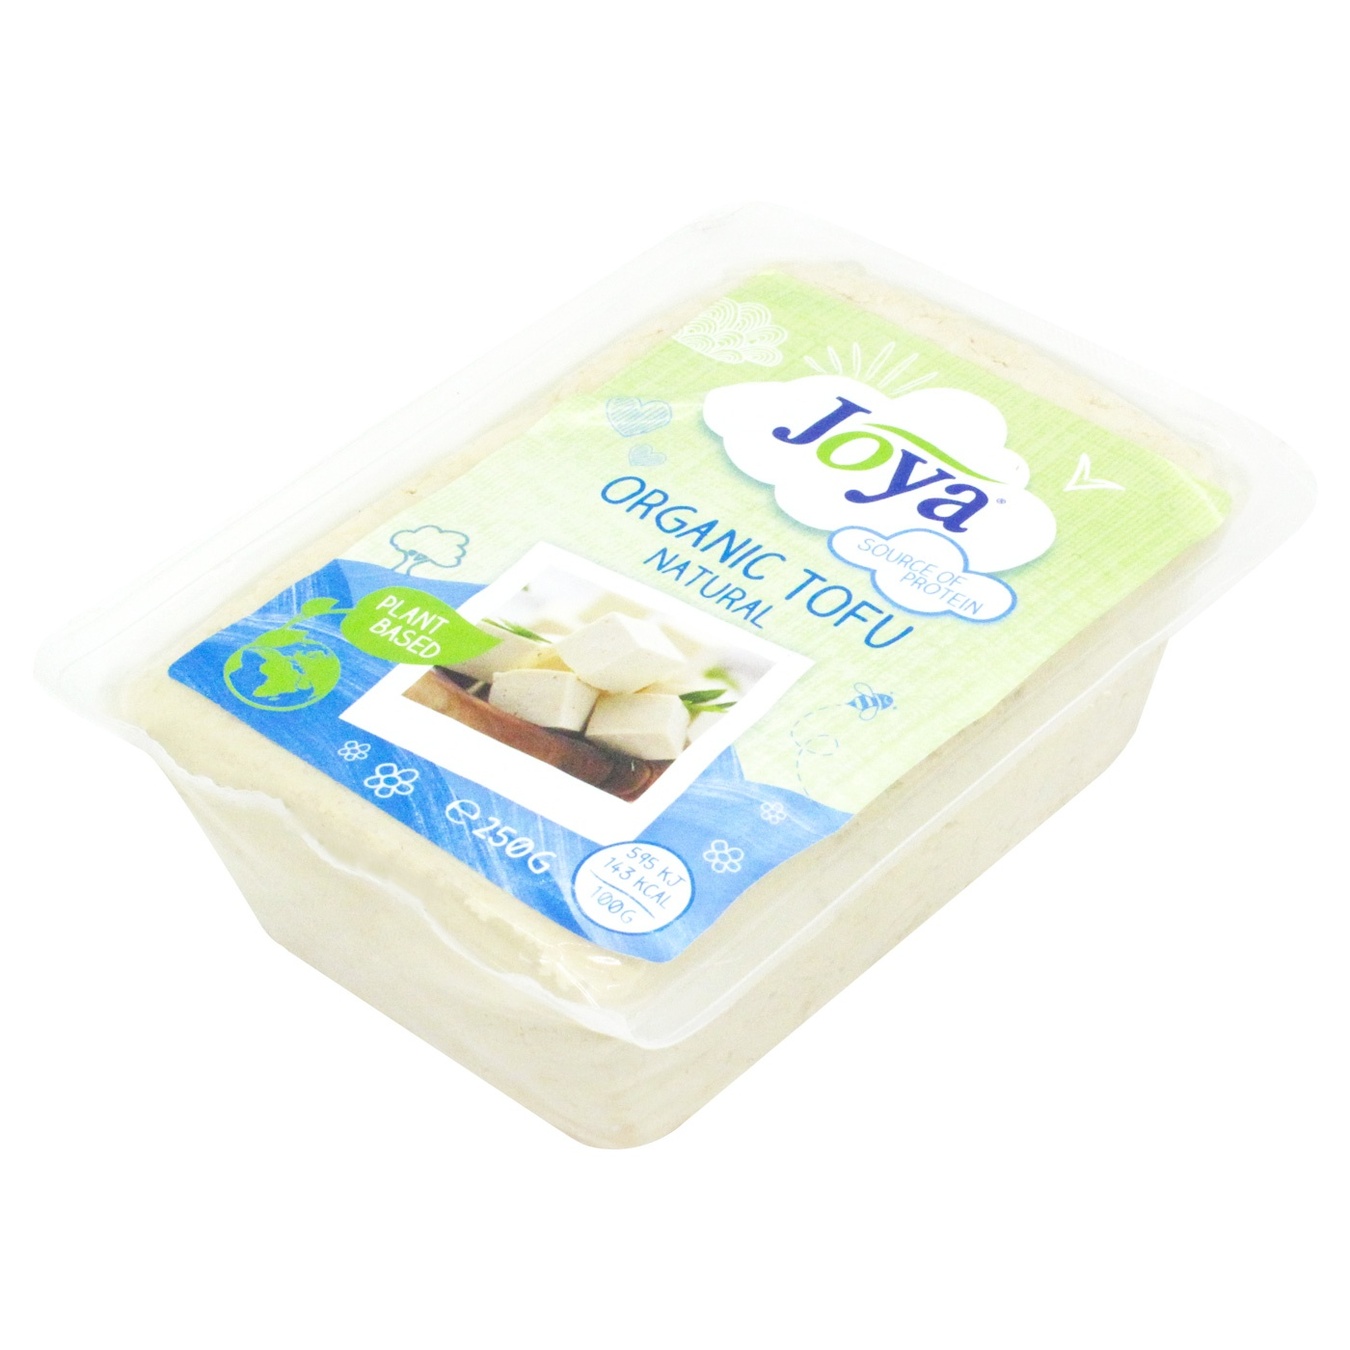 Joya Tofu organic soy cheese 250g 2